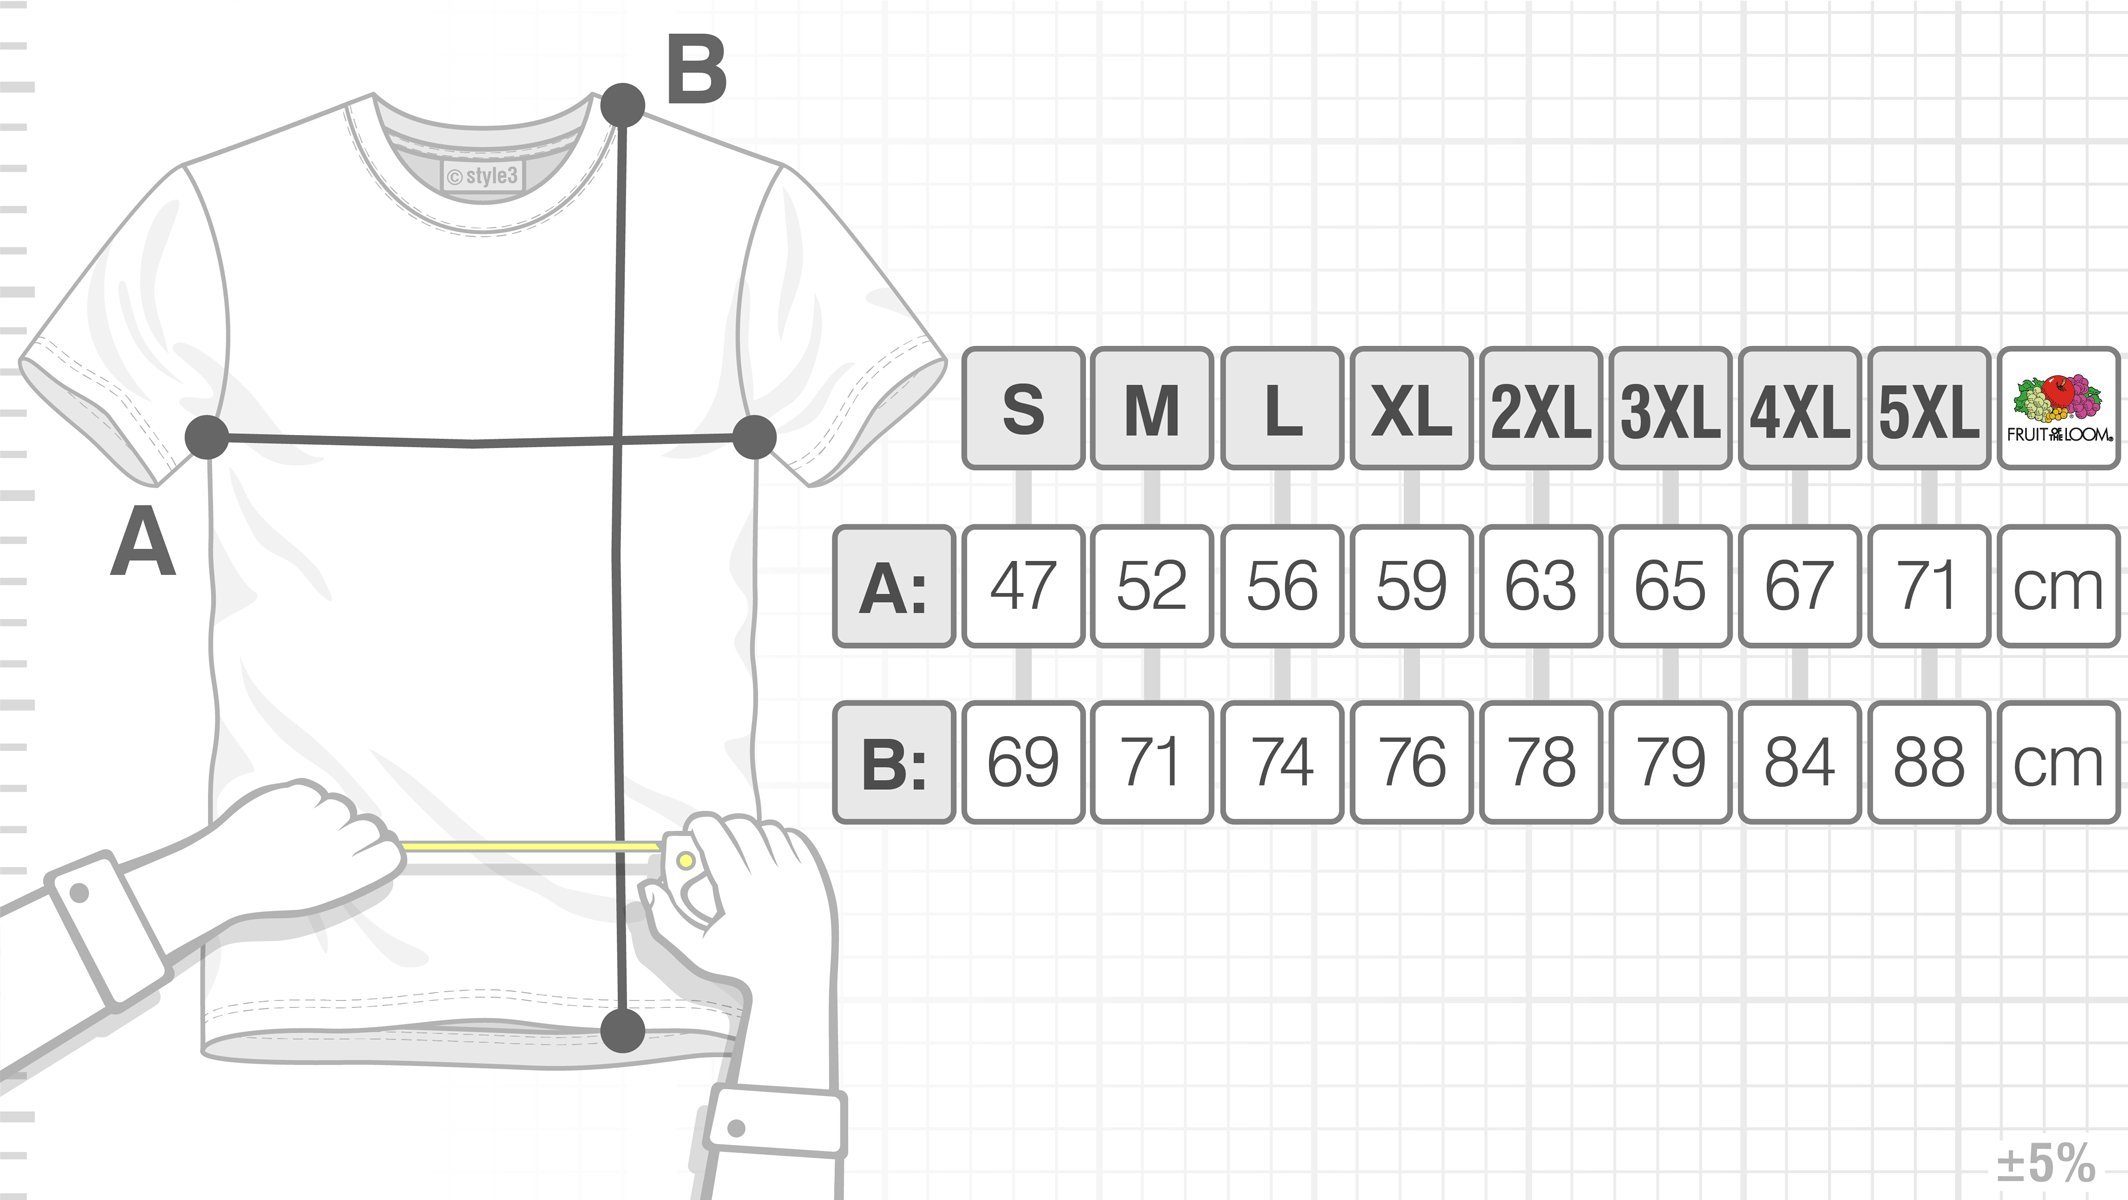 Herren pulli Ugly weihnachtsbaum Sweater 16-Bit Print-Shirt x-mas T-Shirt style3